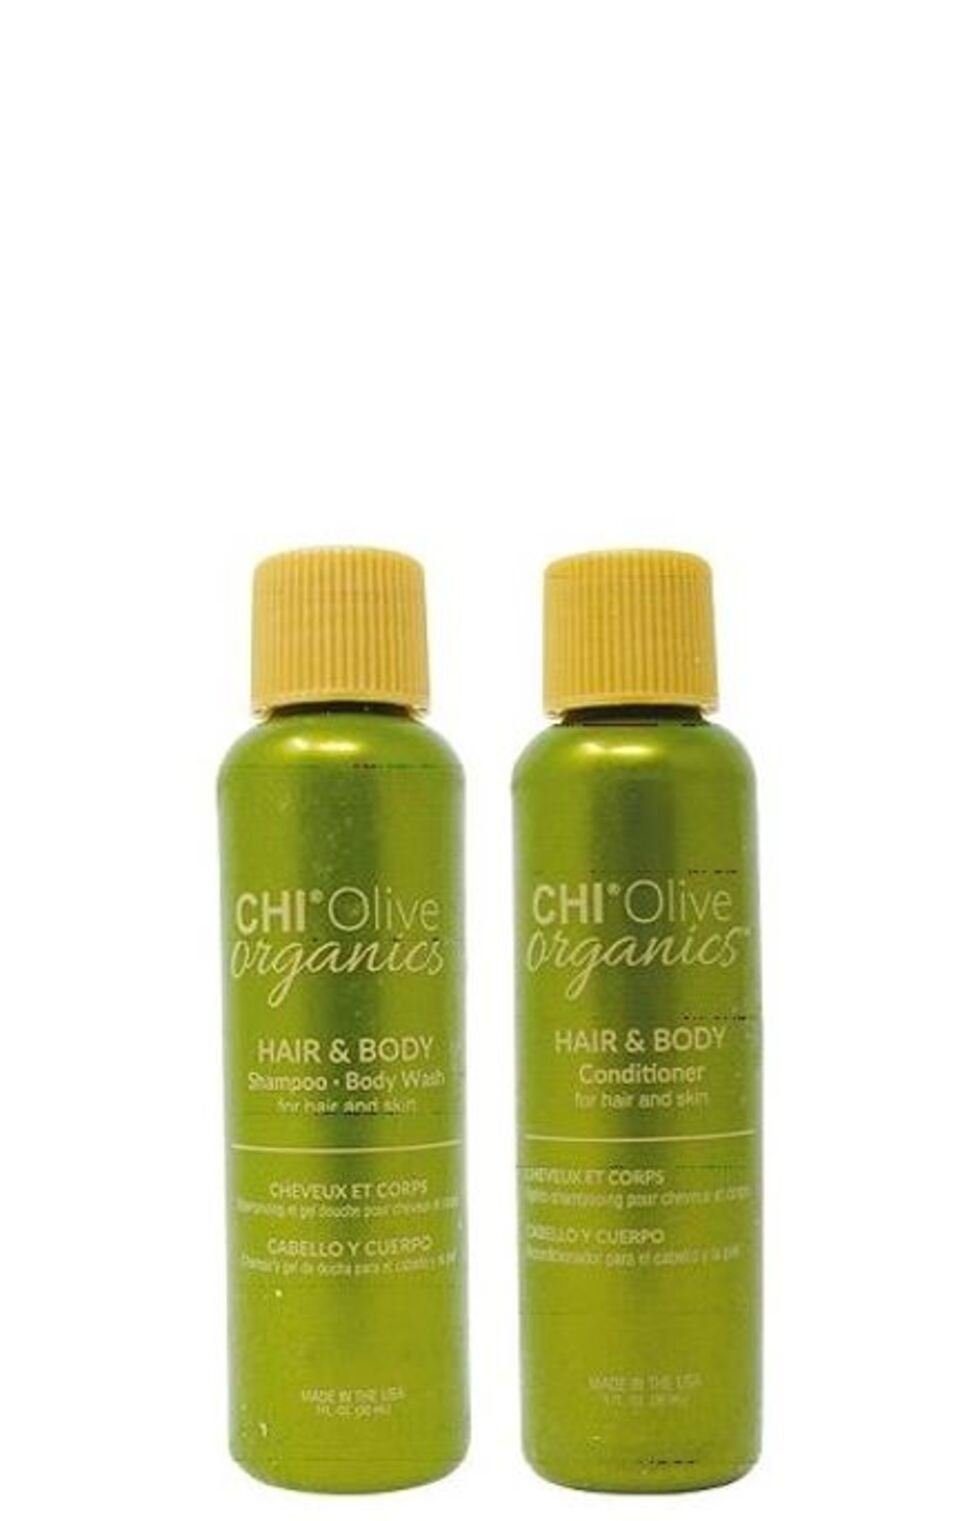 CHI Haarpflege-Set CHI Olive Organics Reiseset Shampoo 30 ml+ Conditioner 30 ml, Reiseset, 2-tlg.